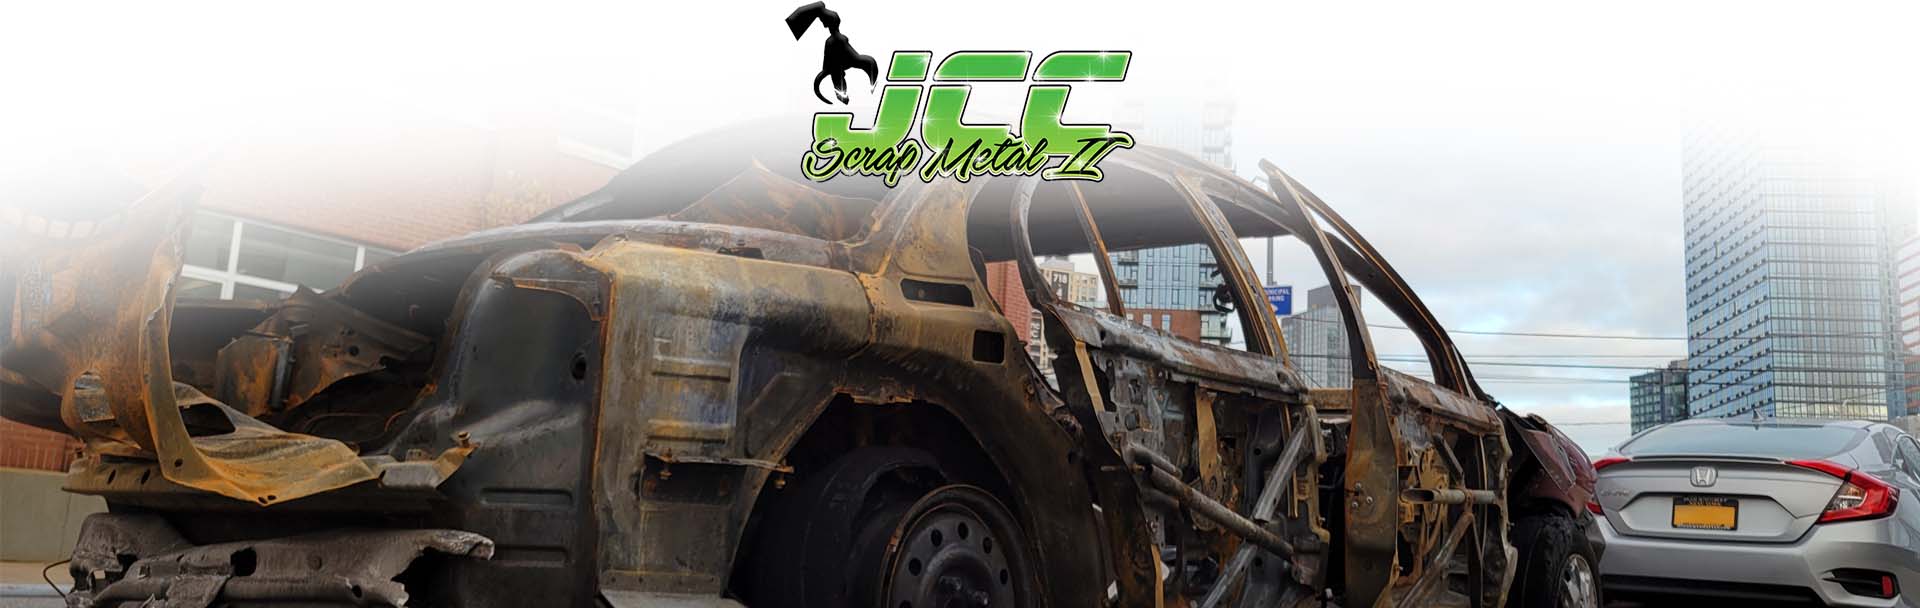 JCC Junk Metal II, Professional Scrap Metal Recycling Services | 197 Bangor Street, Lindenhurst, NY 11757 | 631-816-2000, jccscrapmetal2@gmail.com - Company Scale Image